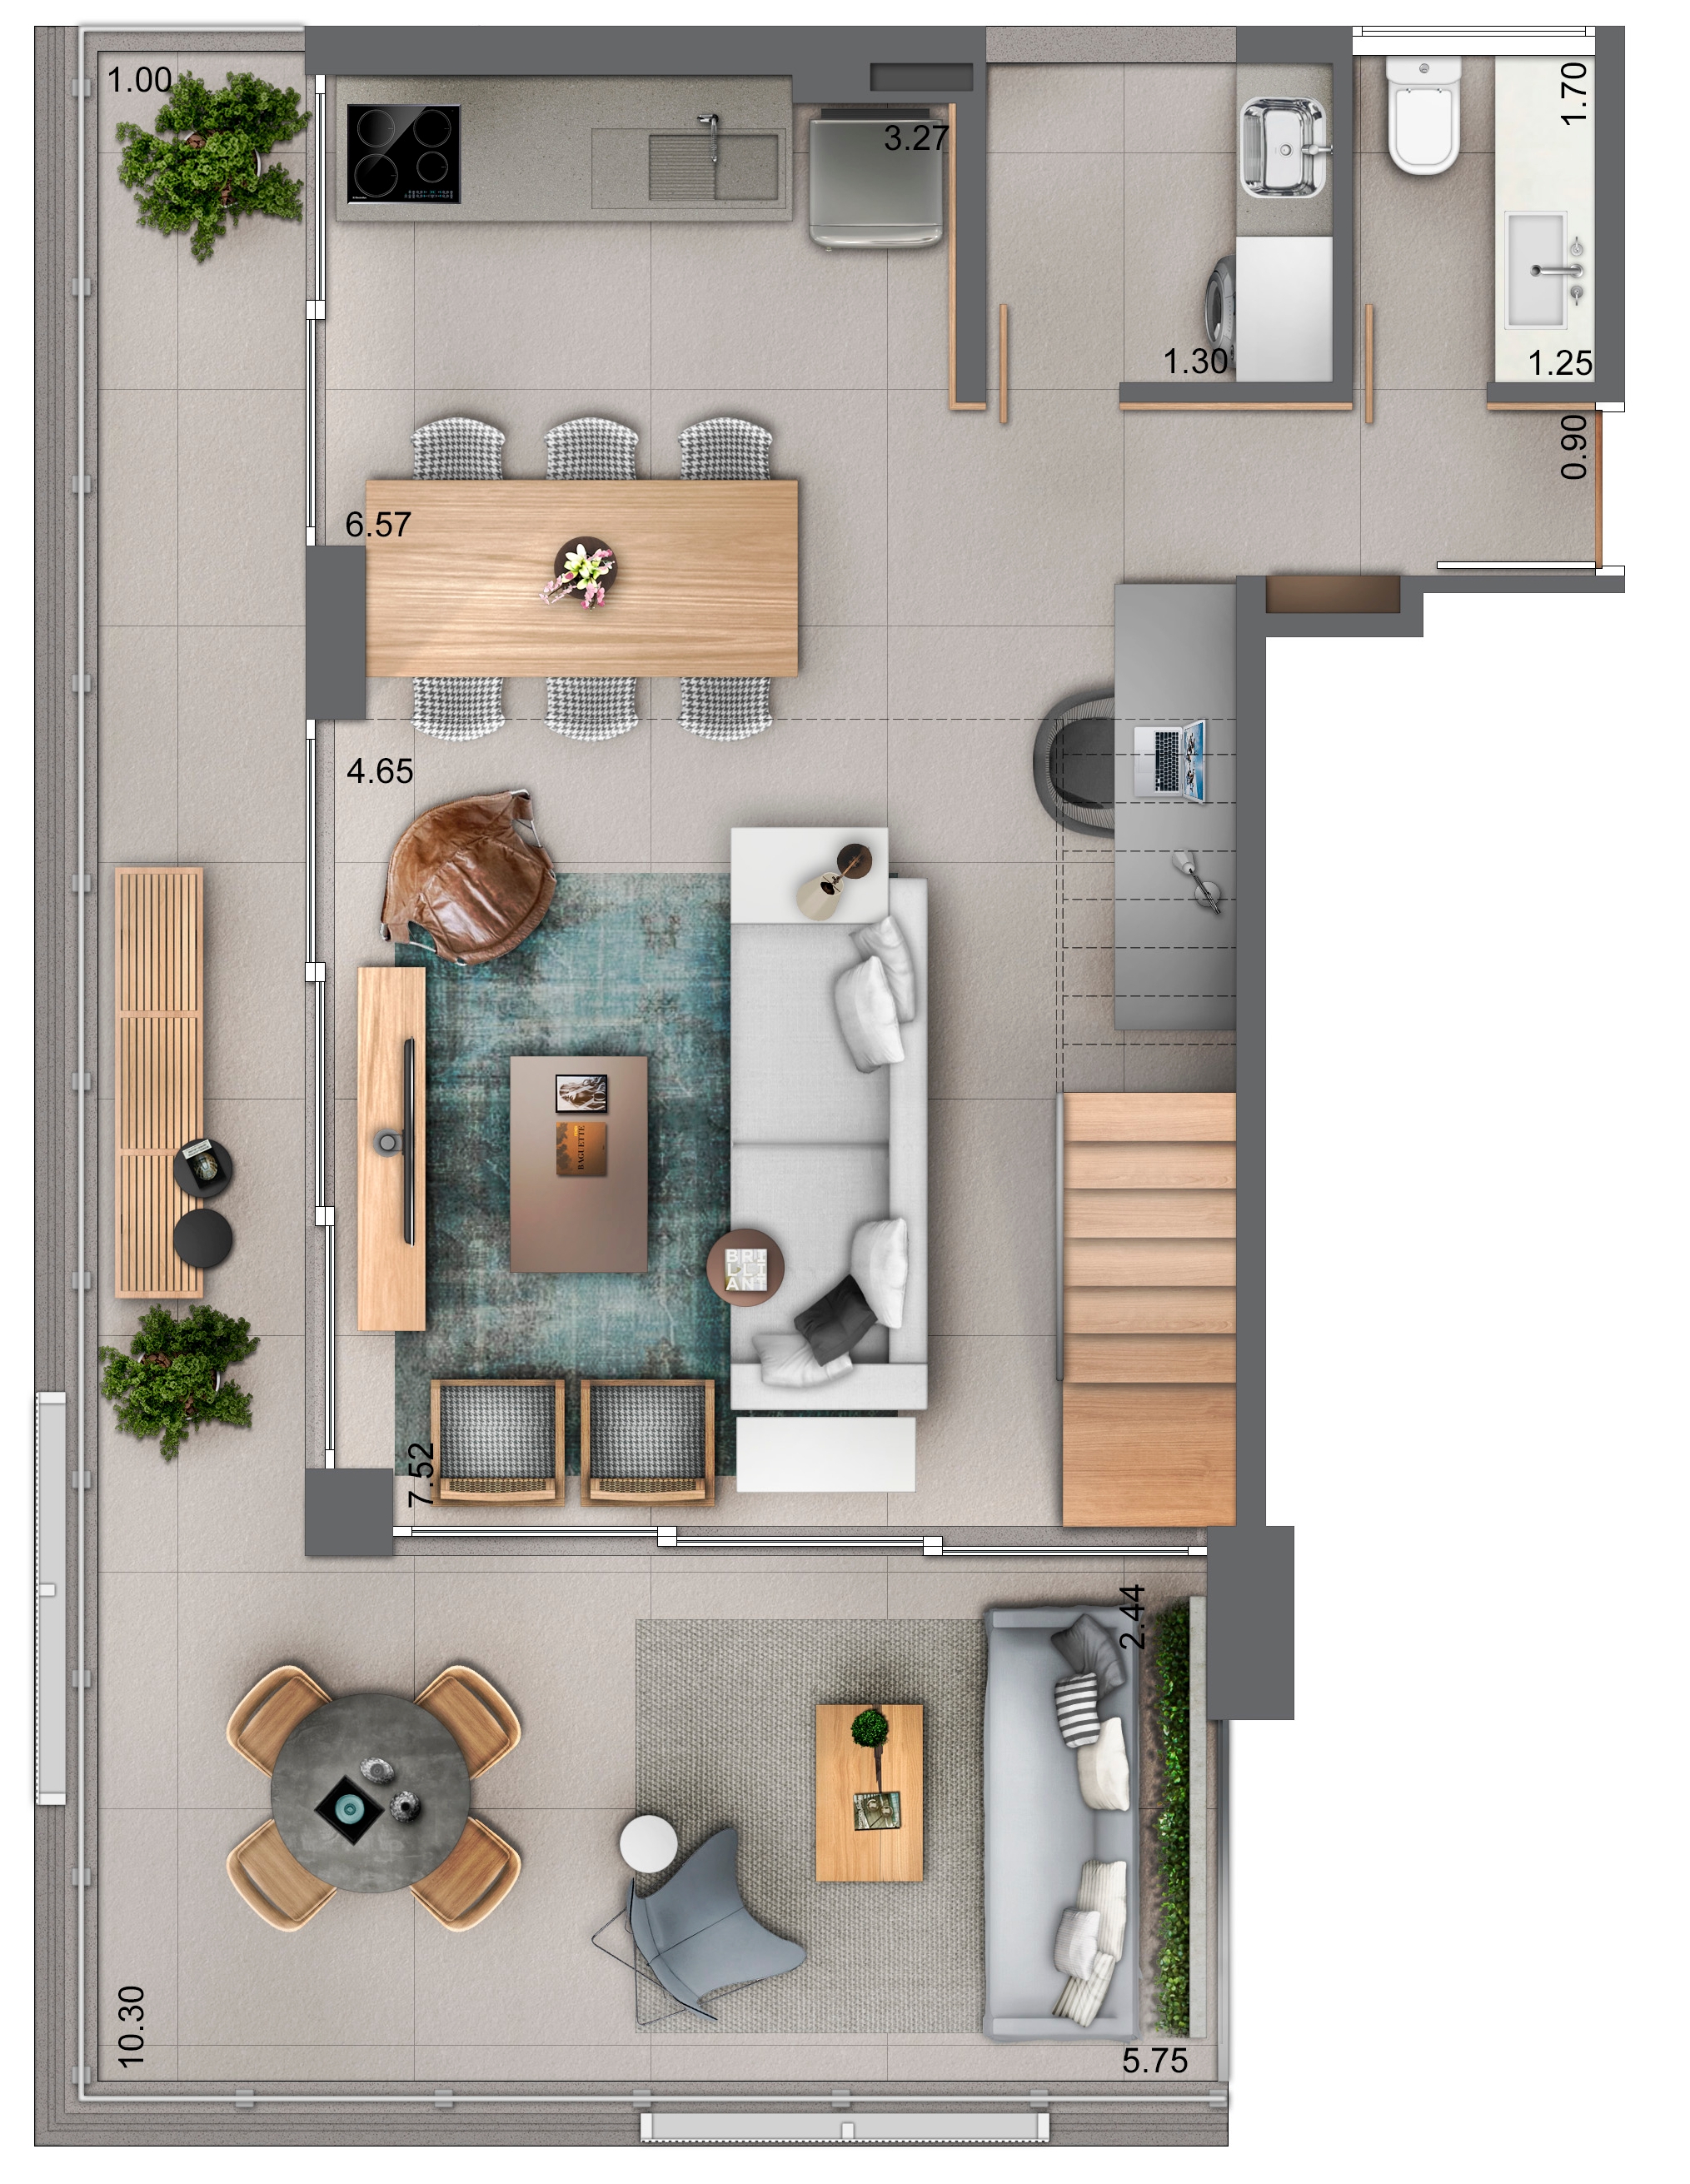 Duplex 89 m² - Piso inferior (sala ampliada)